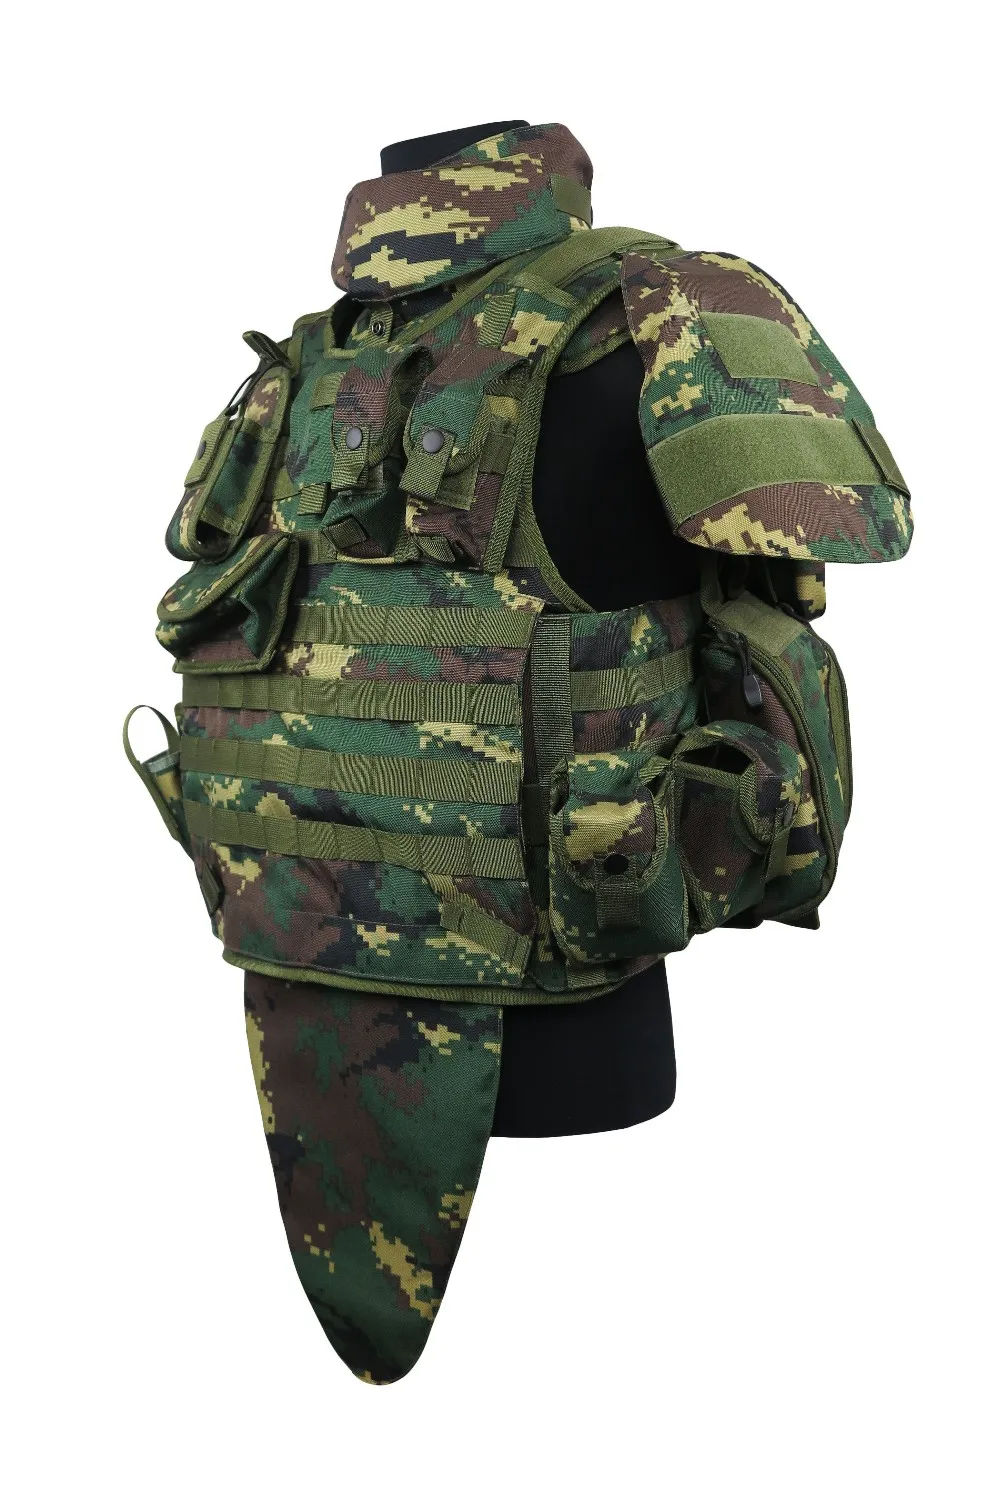 Military Vest Full Protection Bullet Proof Vest Body Armor Bulletproof